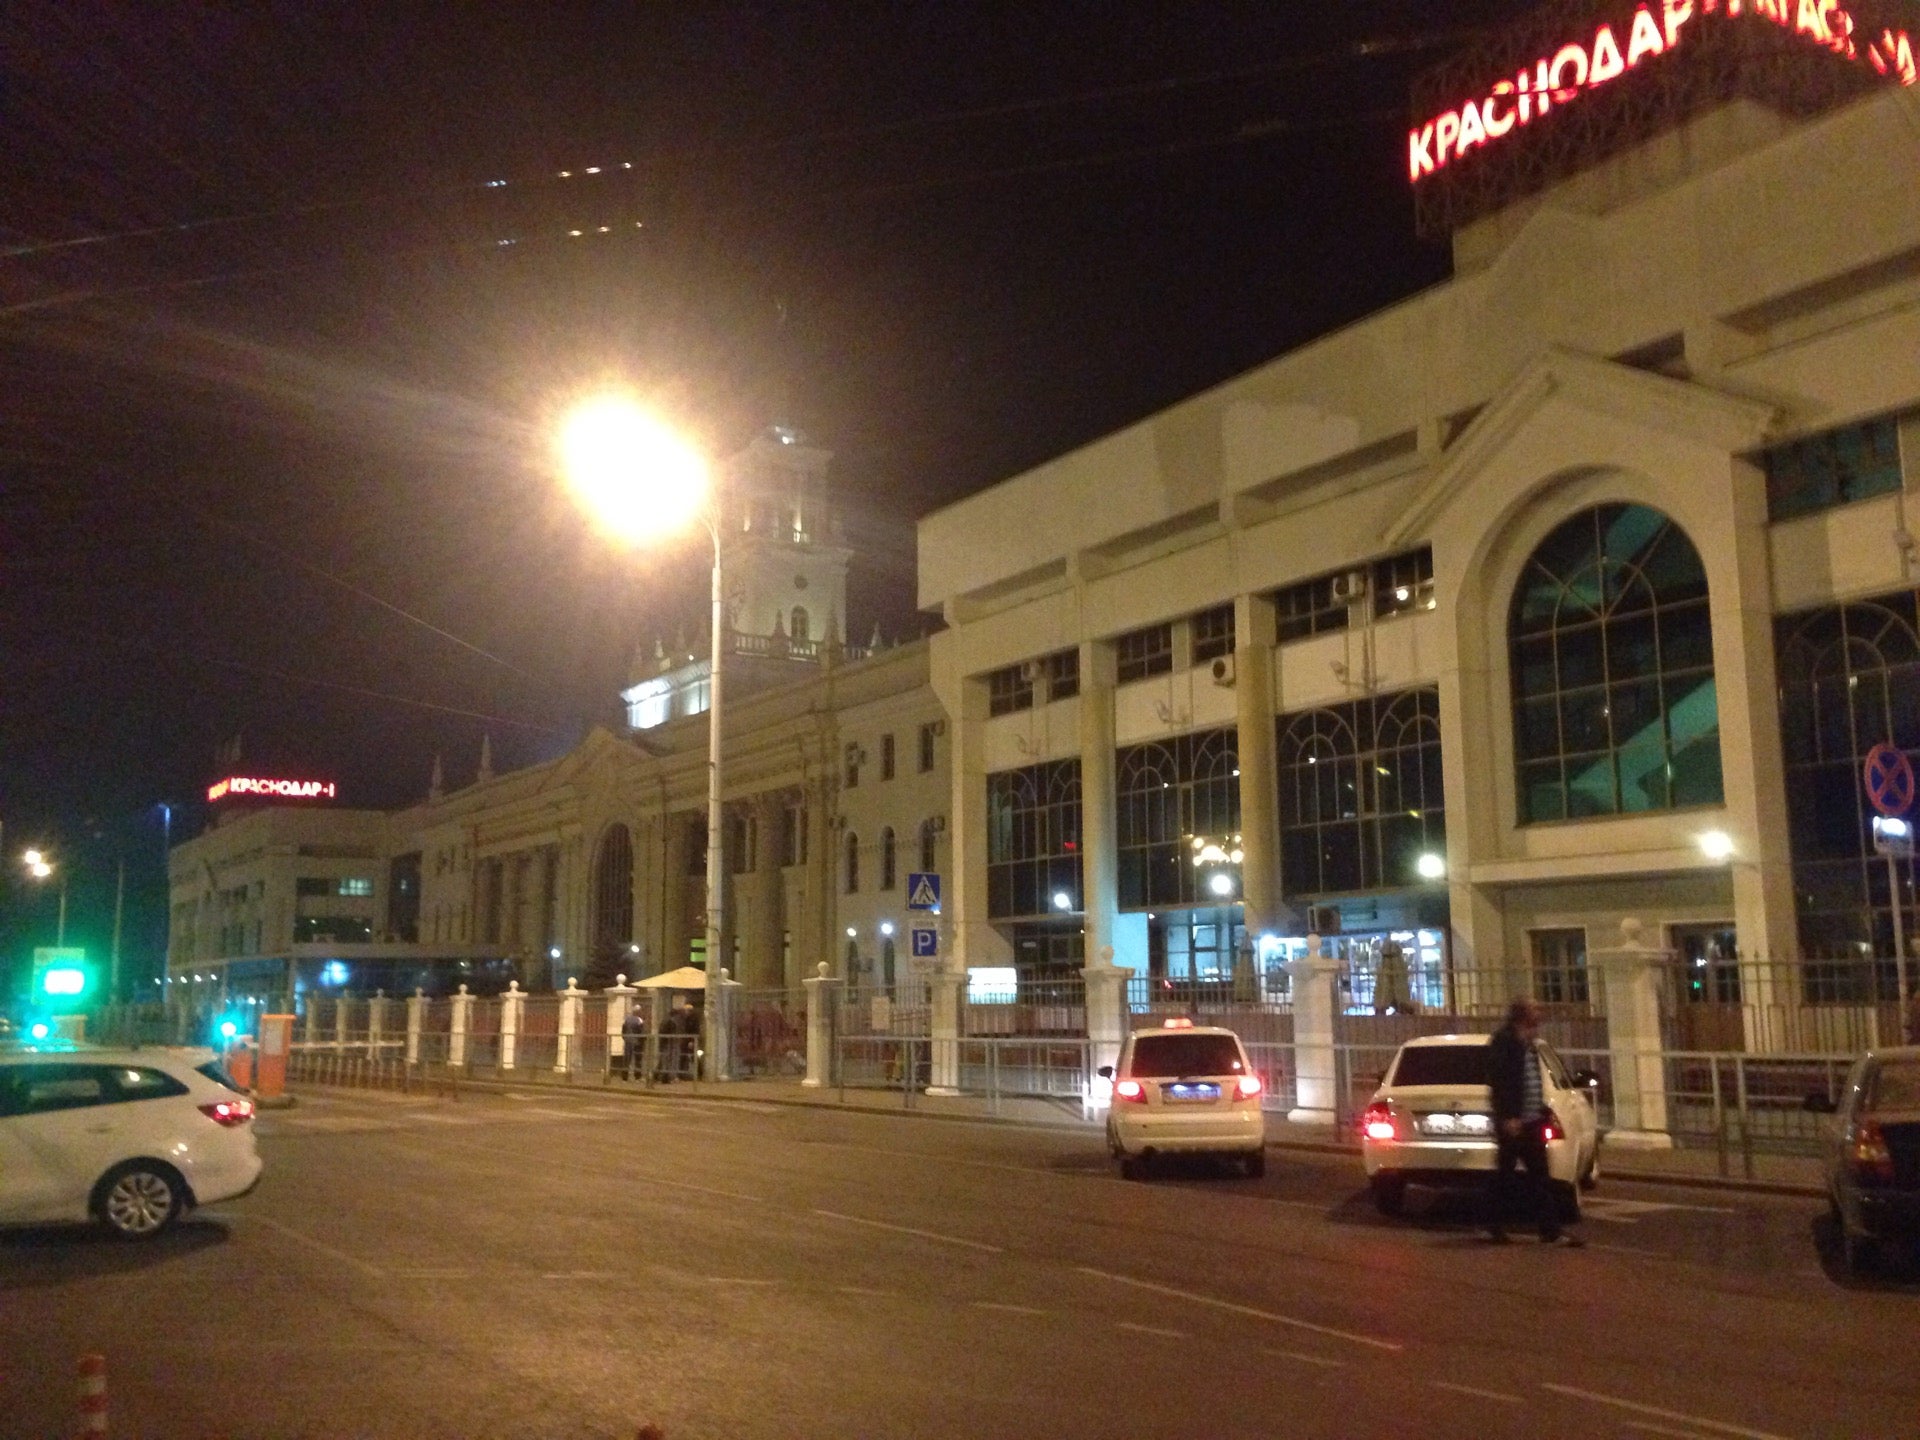 Номер телефона жд краснодара. ЖД вокзал Краснодар 1. Вокзал Краснодар 2022. Краснодар-1 ЖД вокзал ночью. Ночной вокзал Краснодар 1.